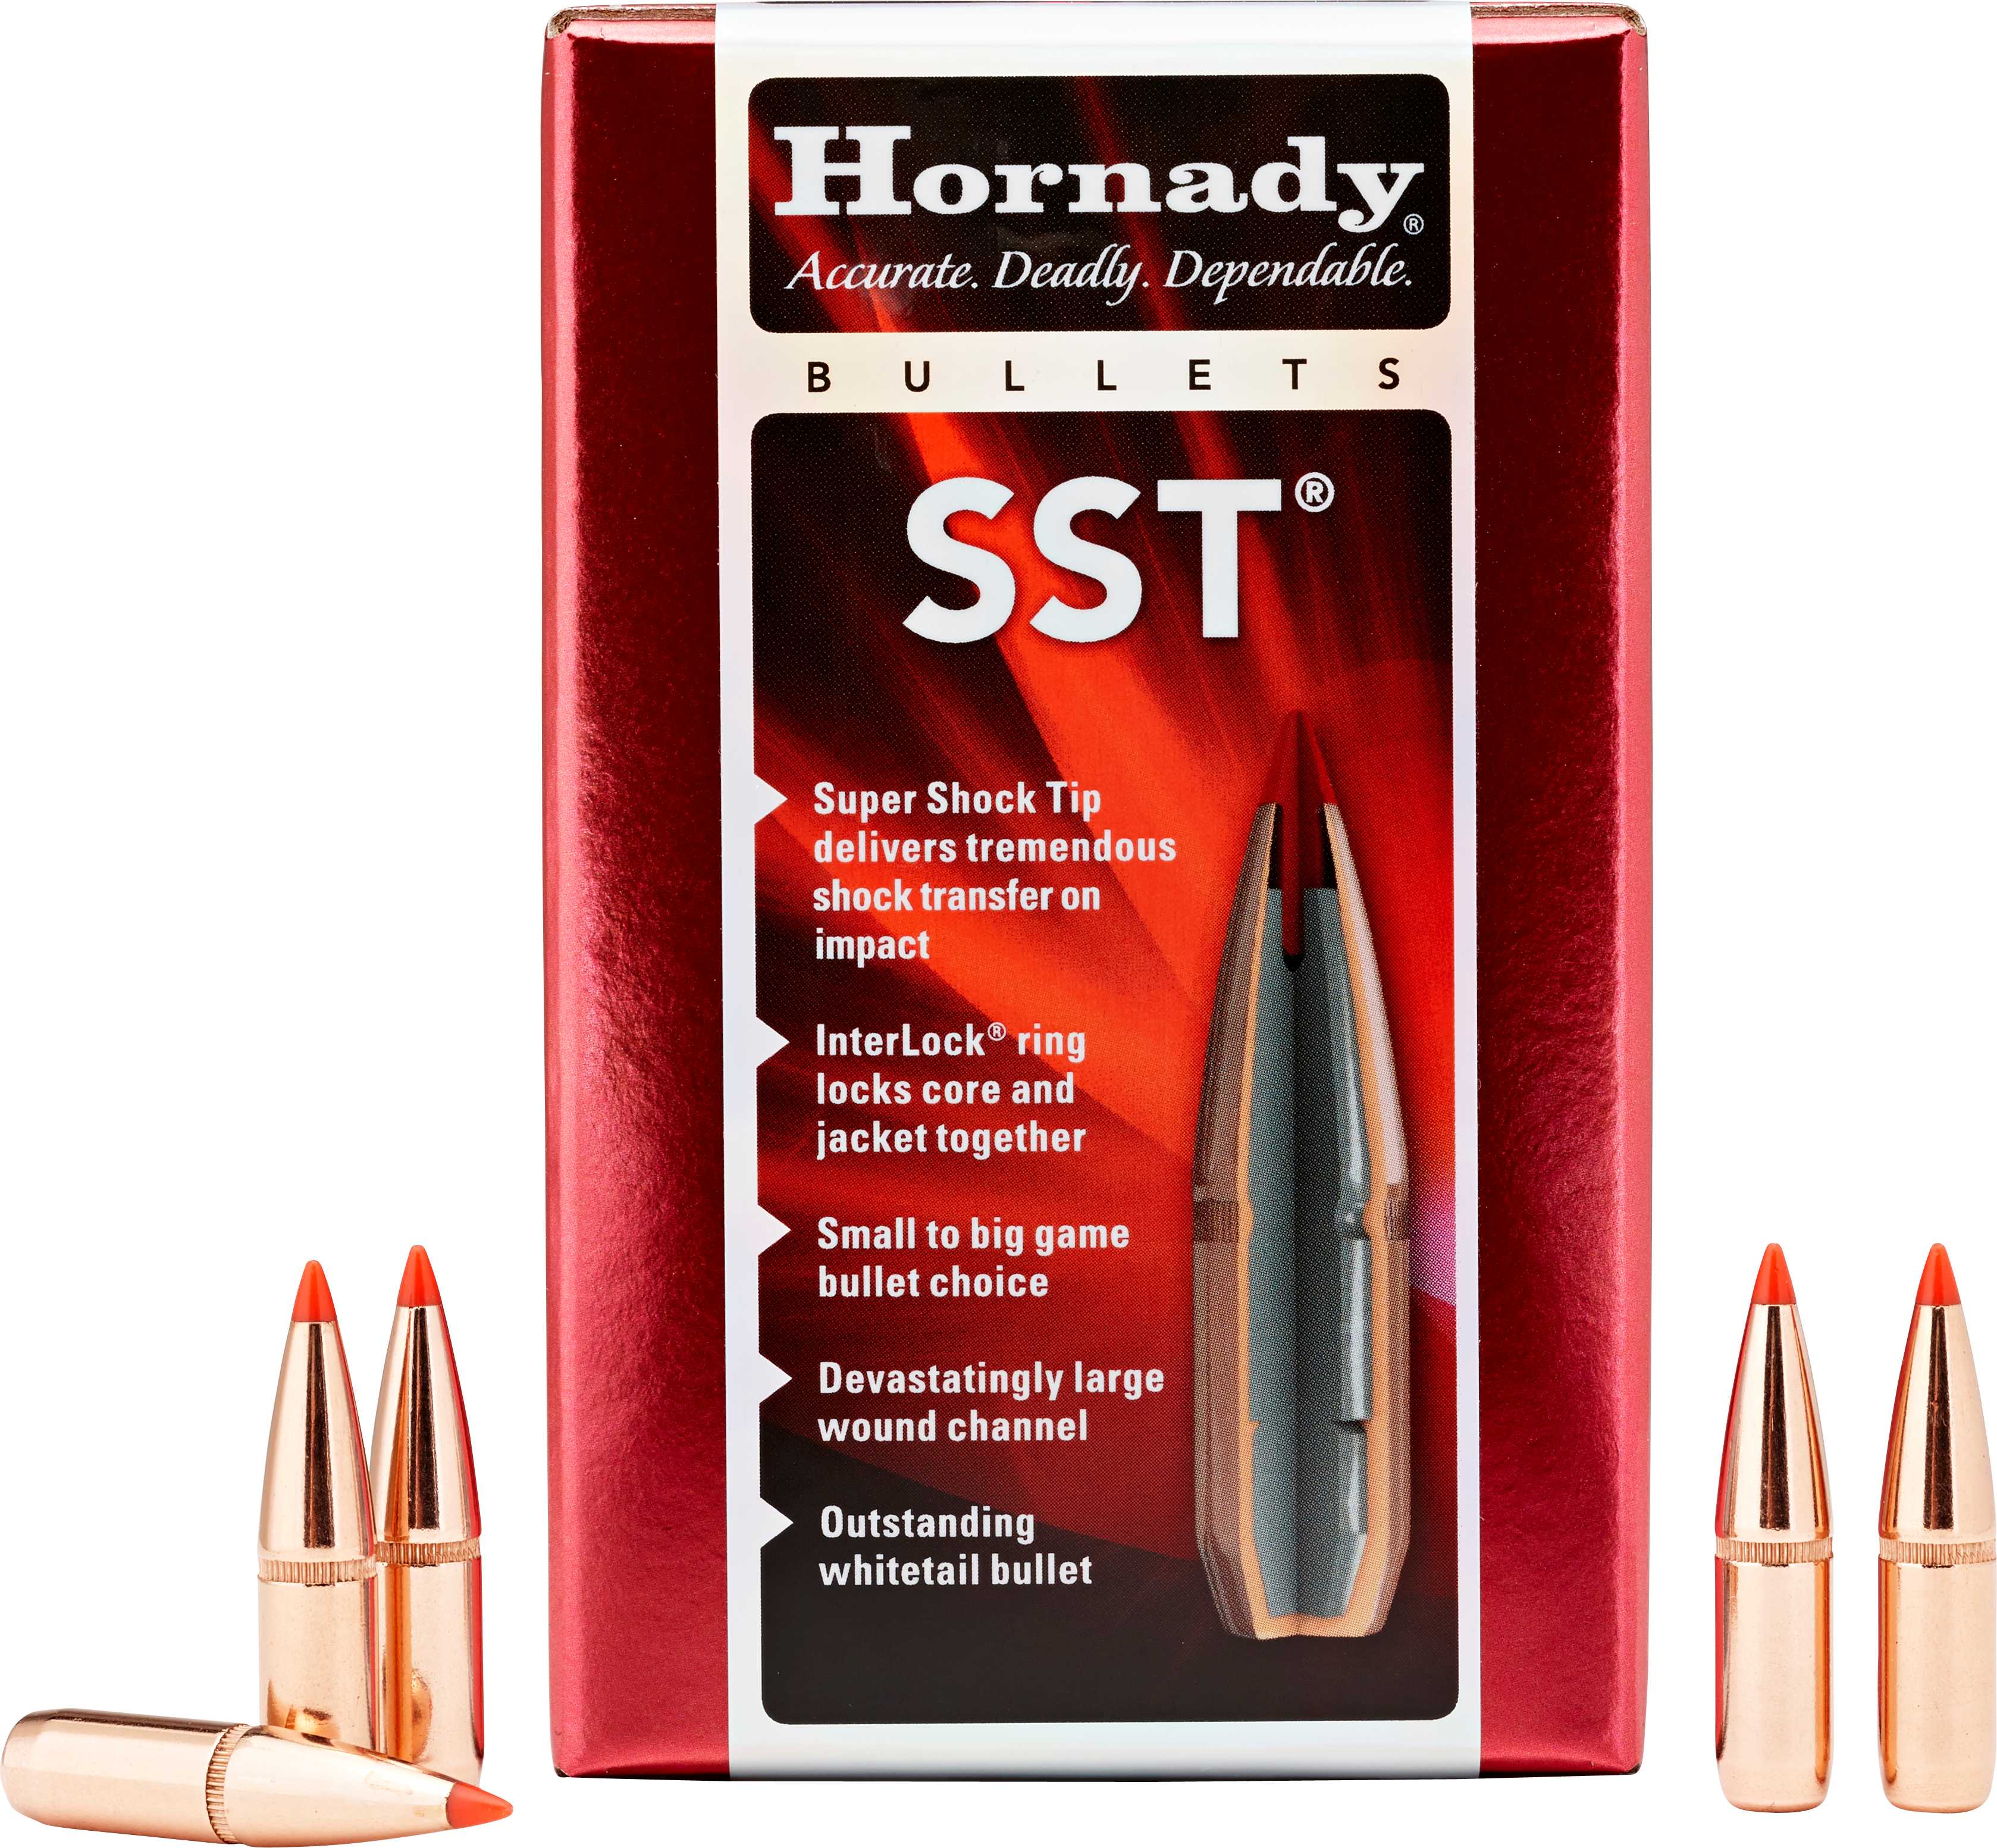 Hornady Bullets, 7mm 162 Grains SST - New In Package